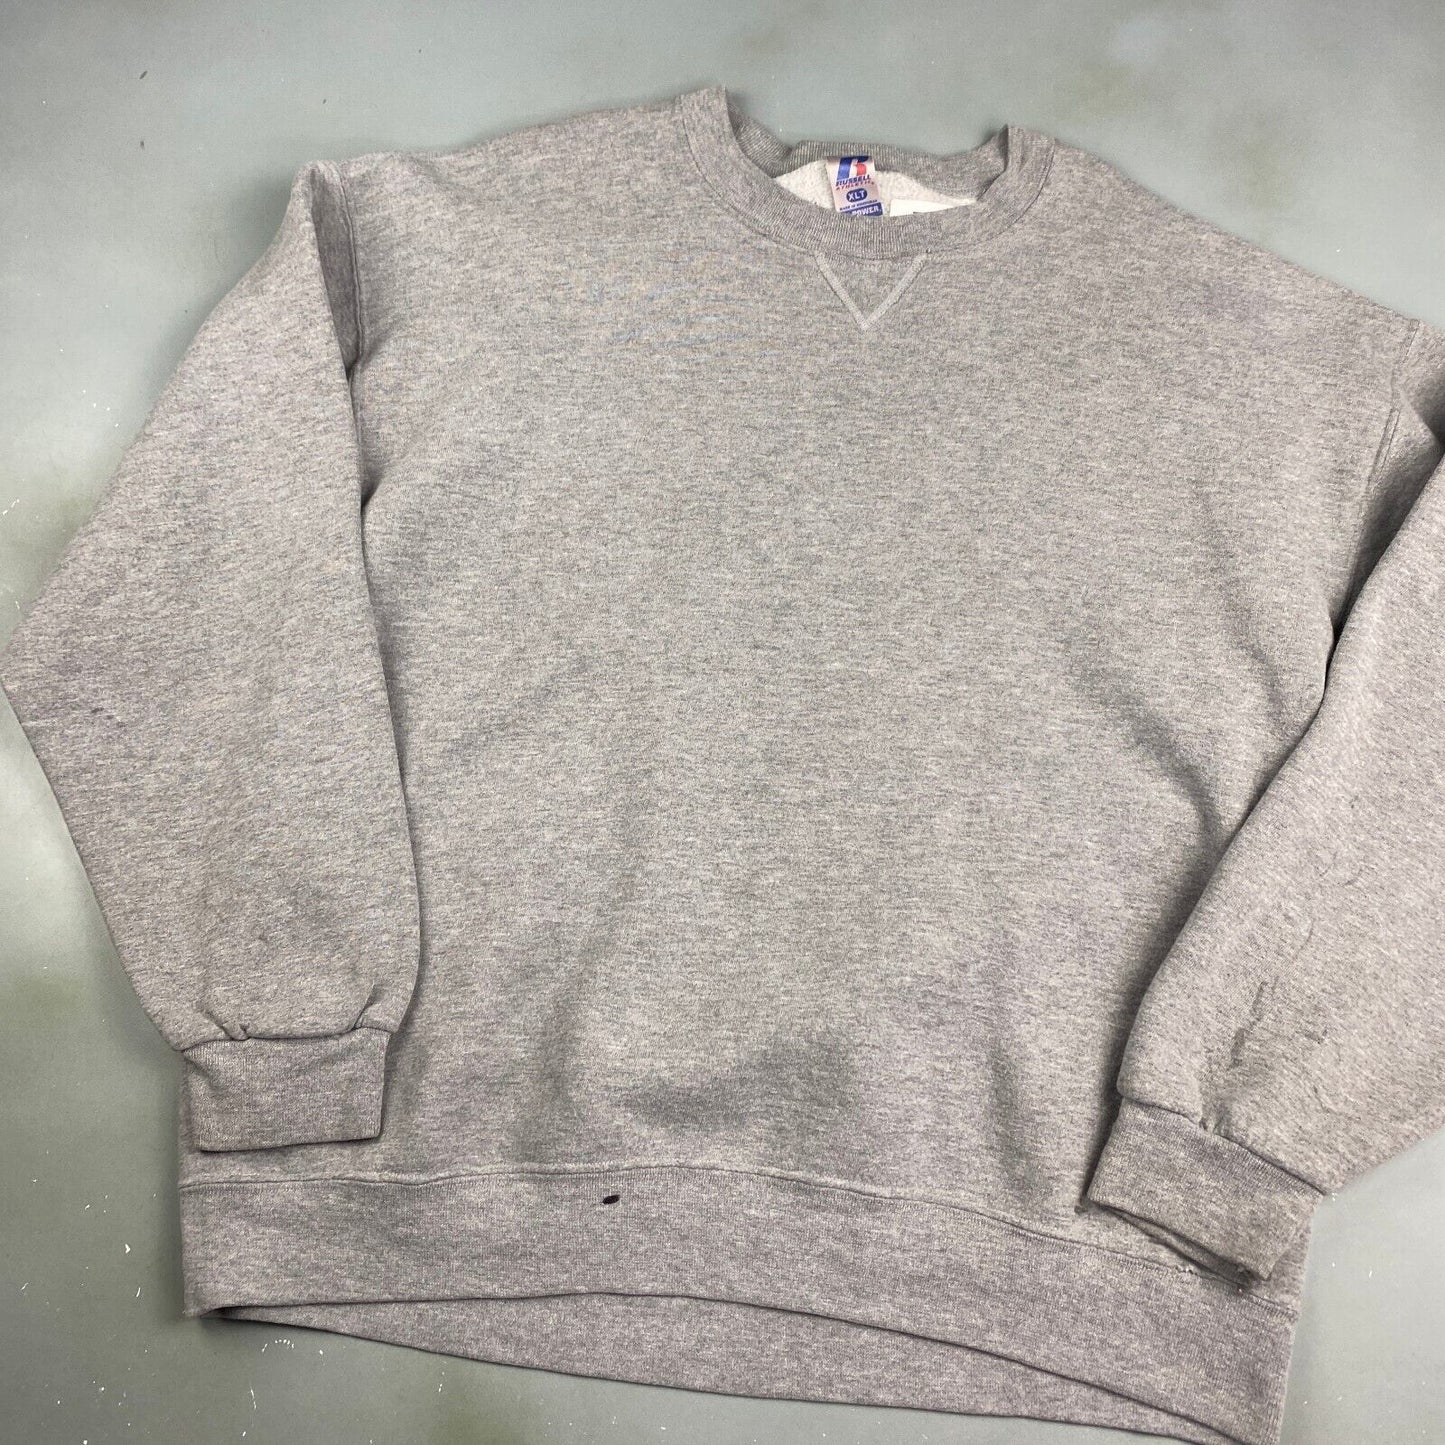 VINTAGE Russell Athletic Blank Grey Crewneck Sweater sz XL Mens Adult